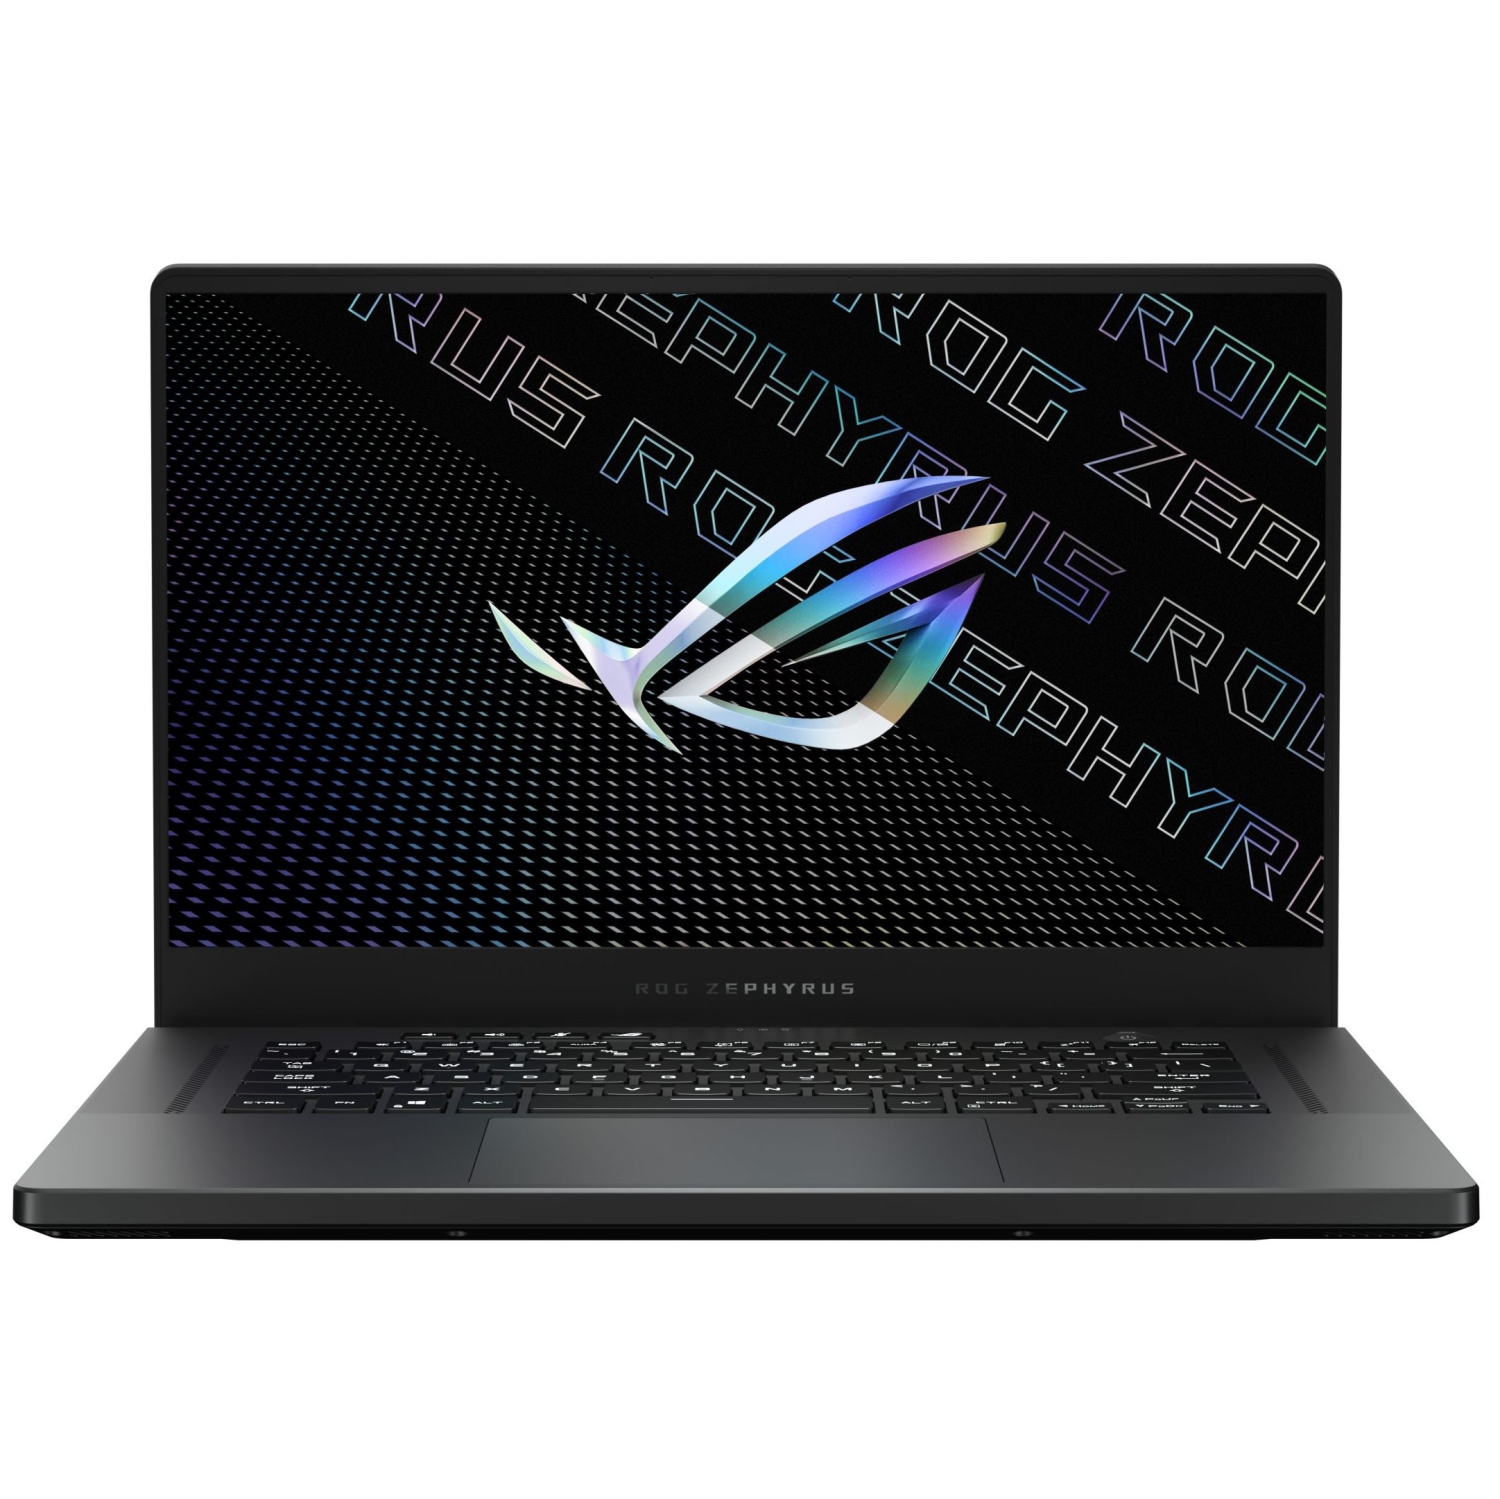 Custom ASUS ROG Zephyrus G15 Laptop (AMD Ryzen 9 5900HS, 24GB RAM, 2TB PCIe SSD, NVIDIA RTX 3070, Win 10 Pro)